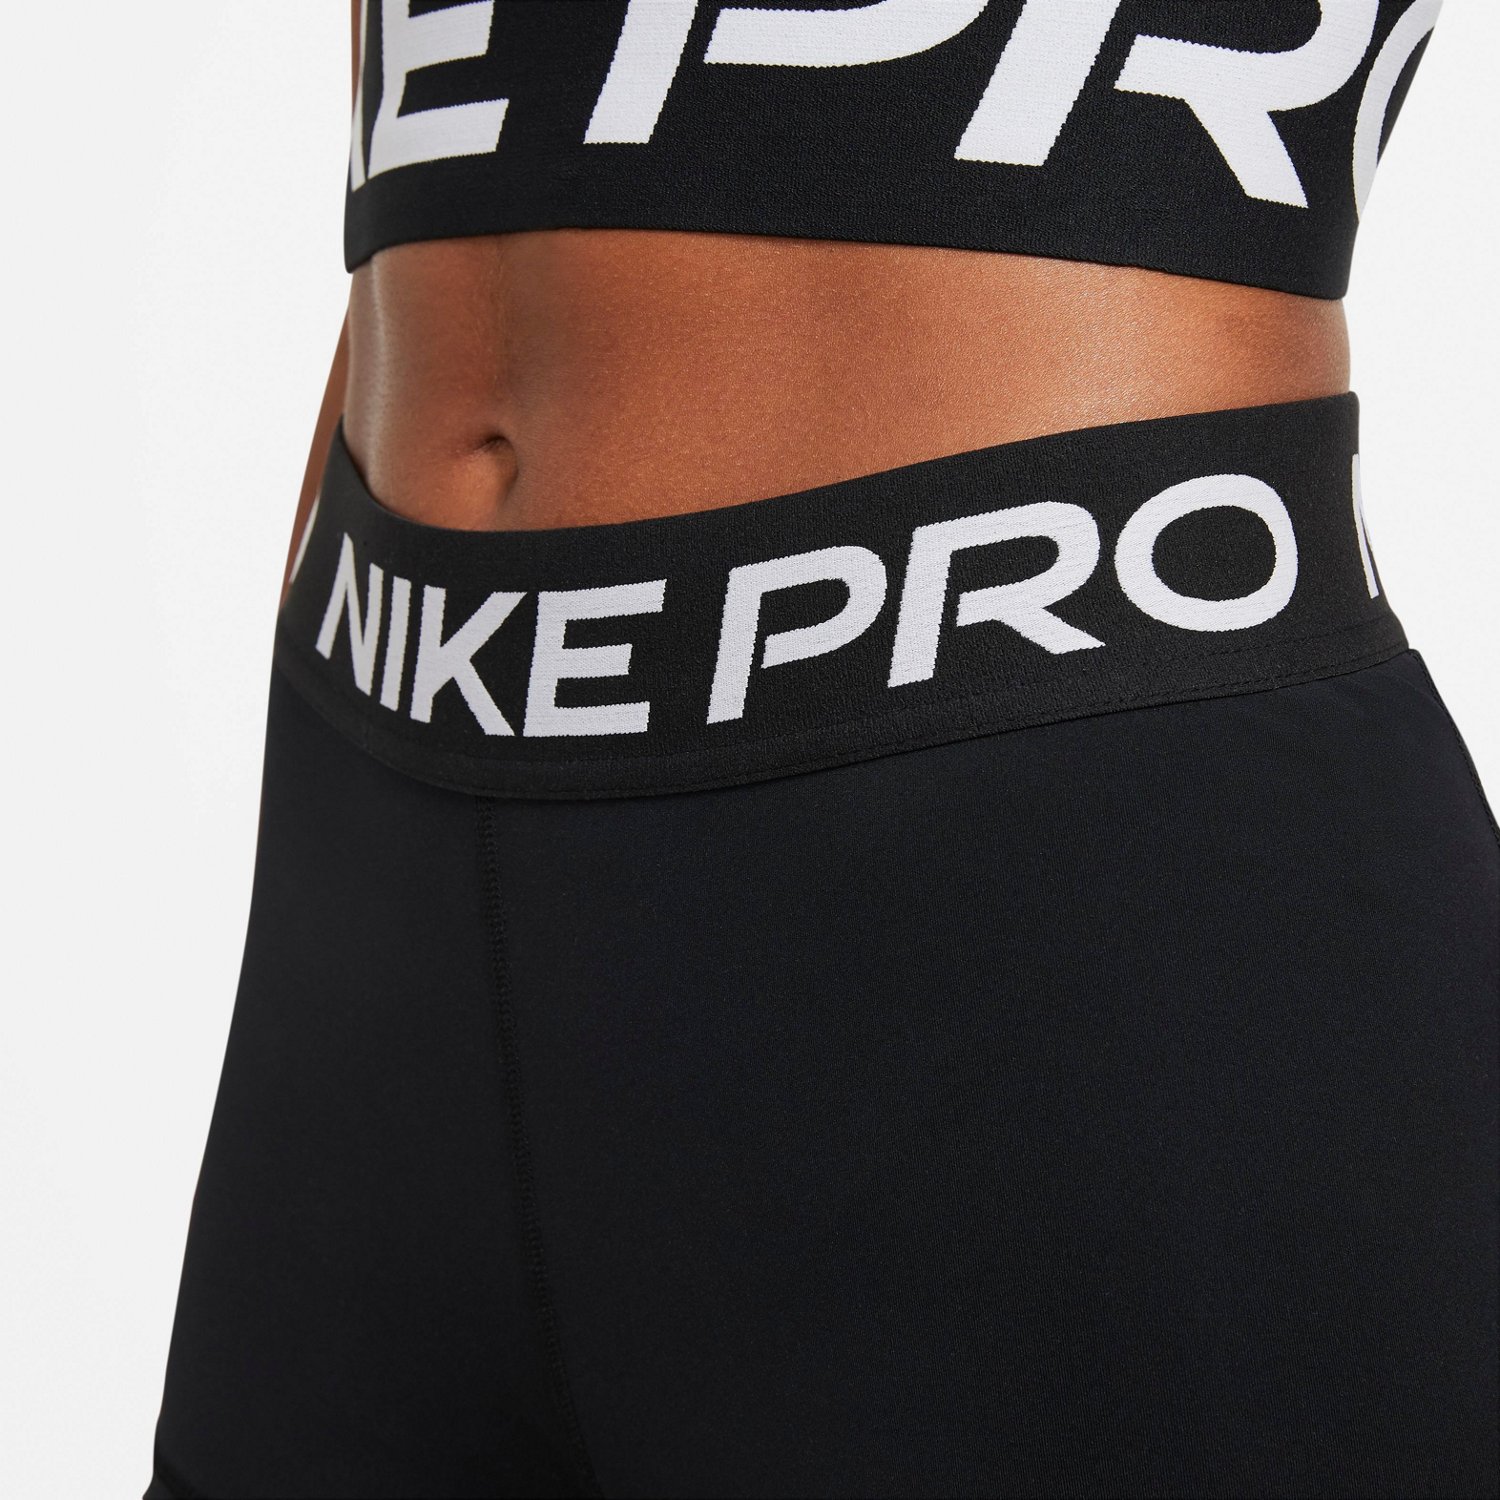 Nike Womens Pro 365 3 Shorts